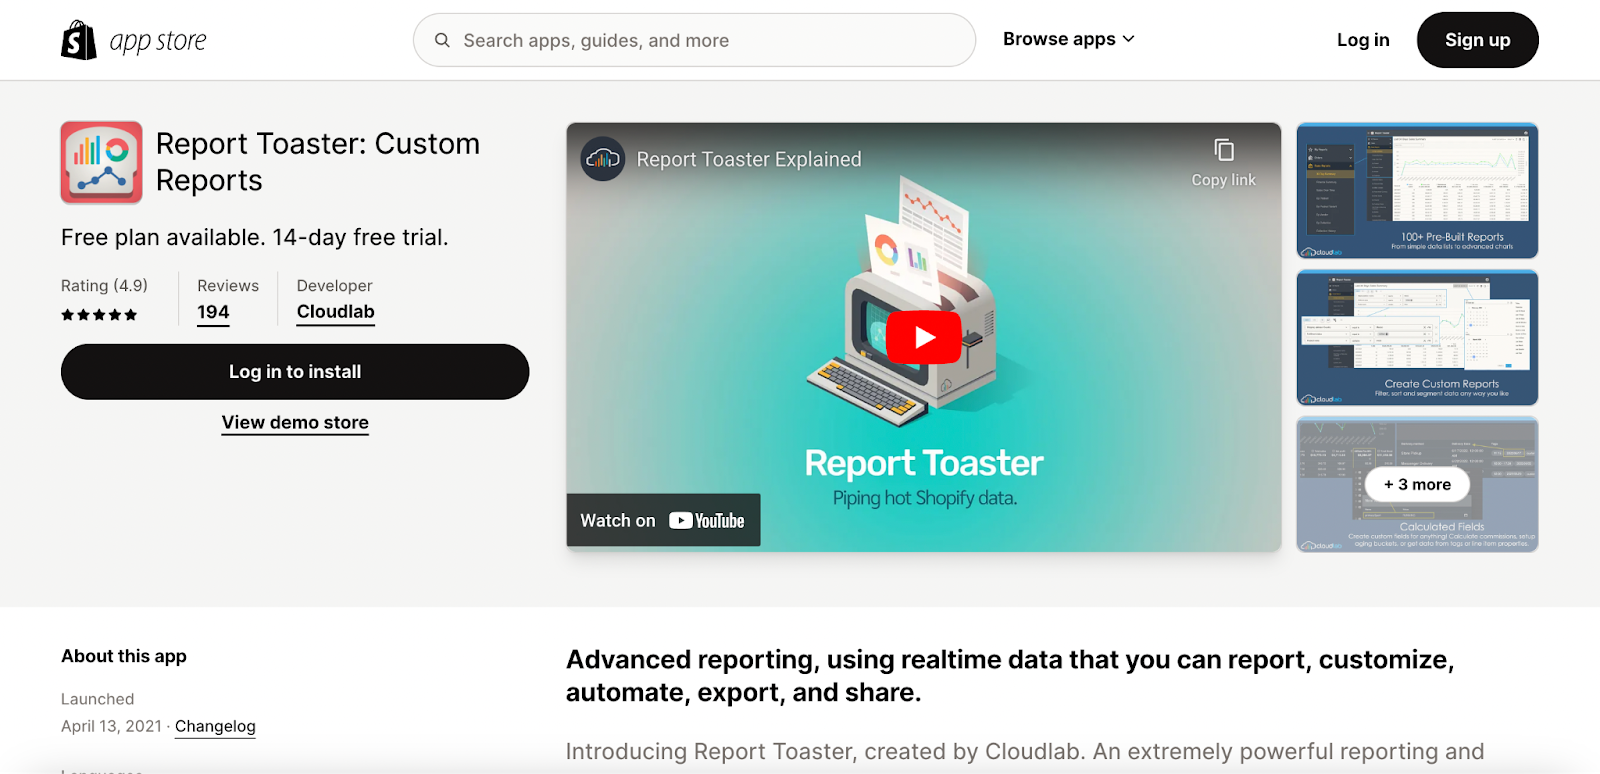 Report Toaster: Custom Reports